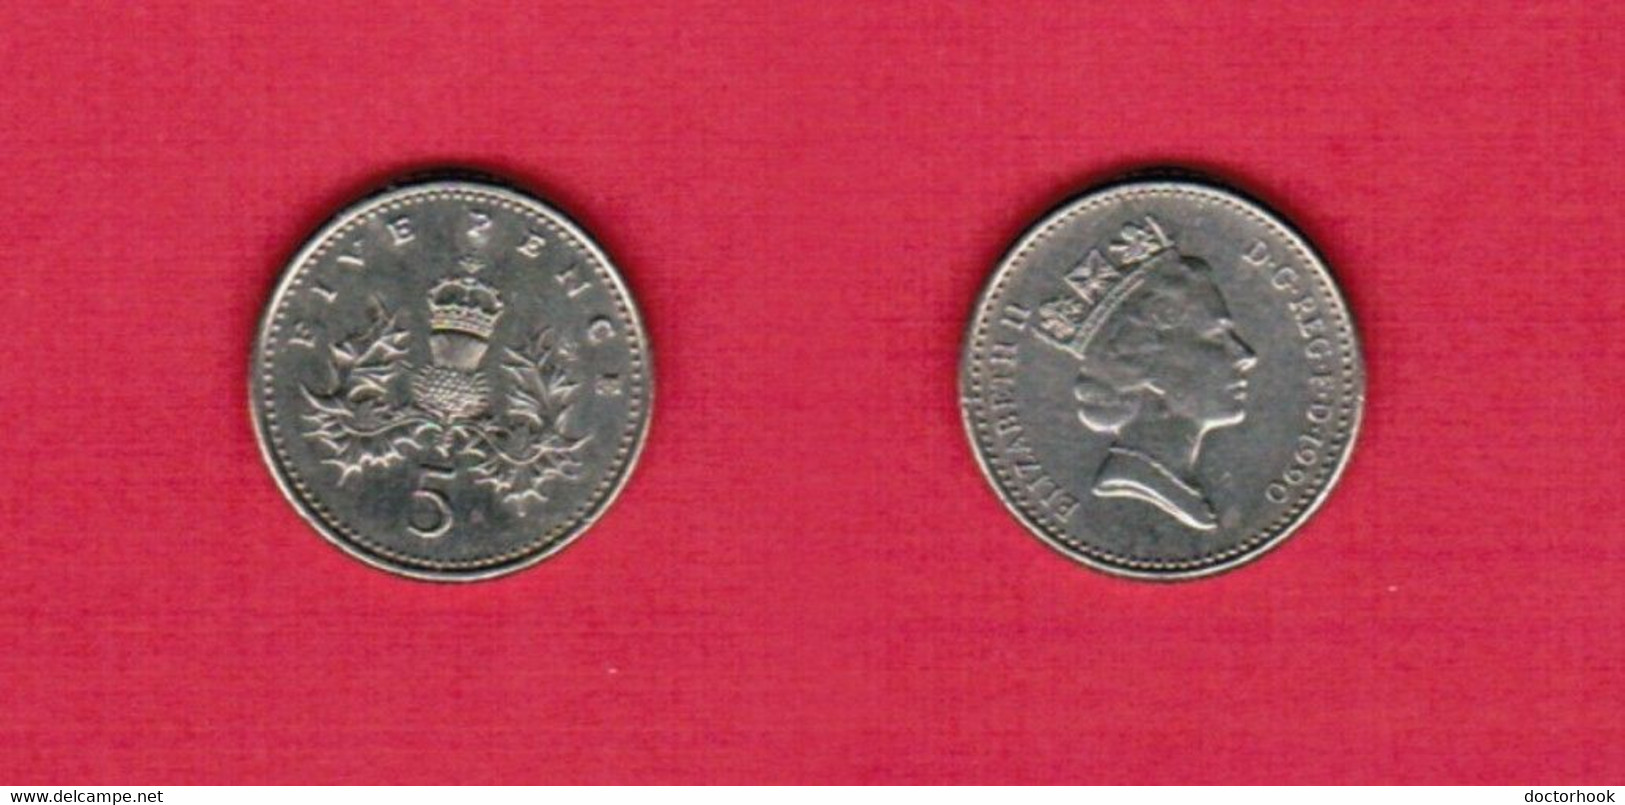 GREAT BRITAIN  5 PENCE 1990 (KM # 937b) #6718 - 5 Pence & 5 New Pence